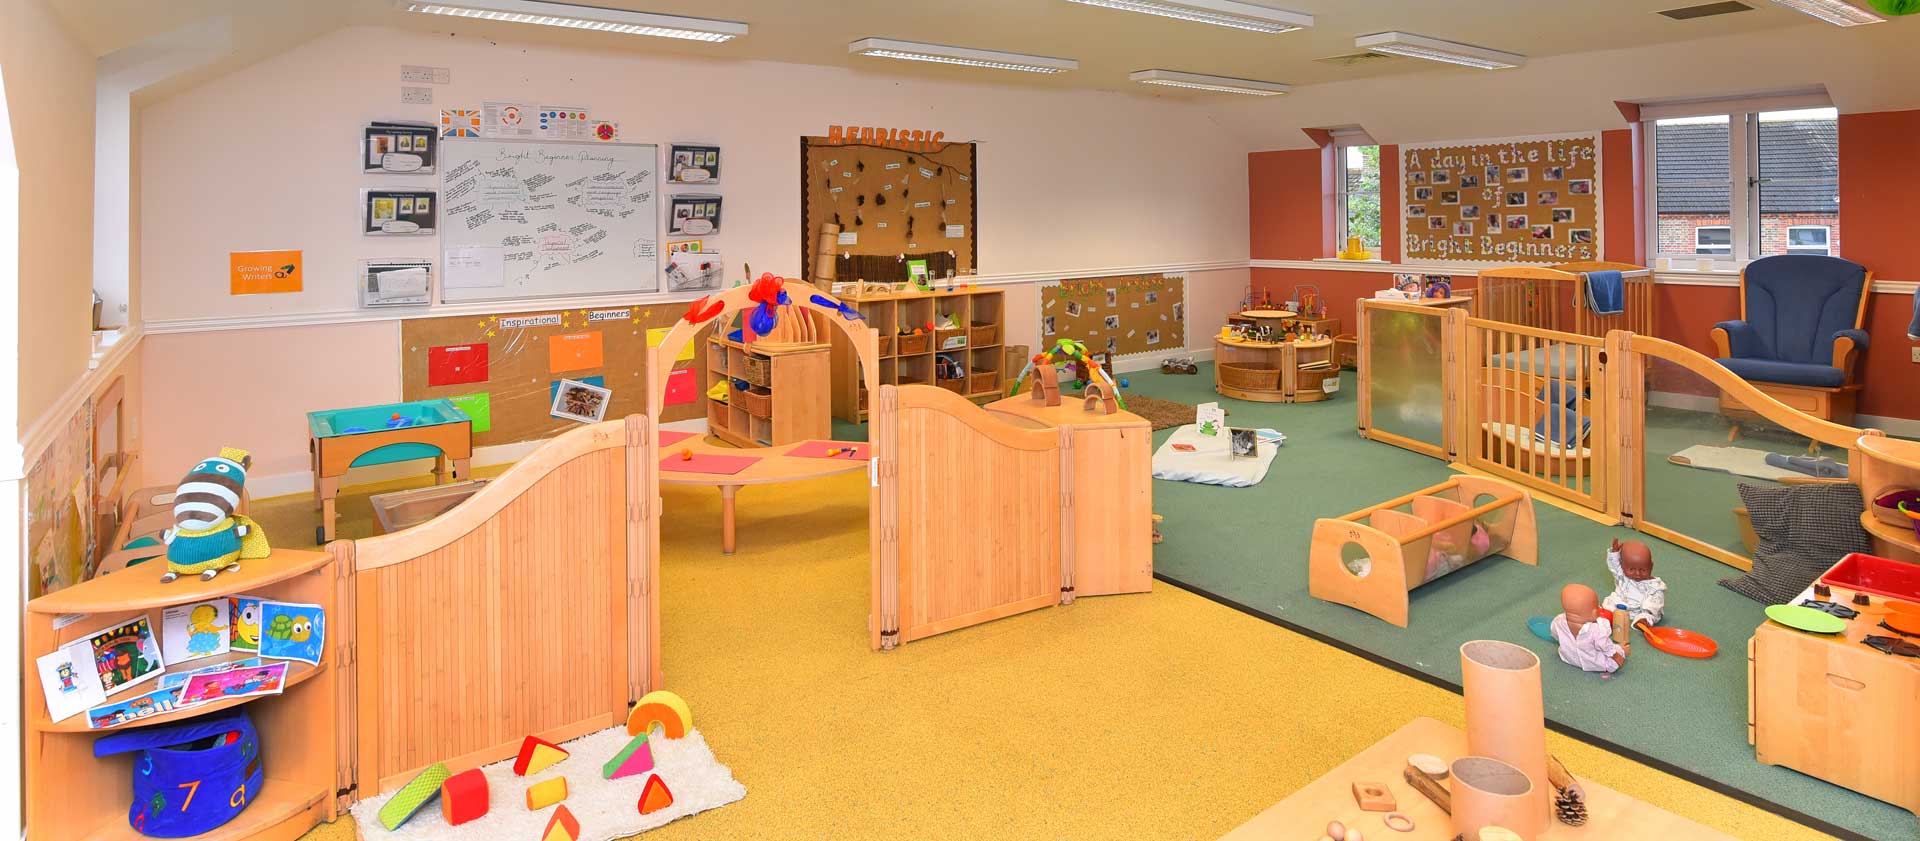 Windsor Day Nursery and Preschool